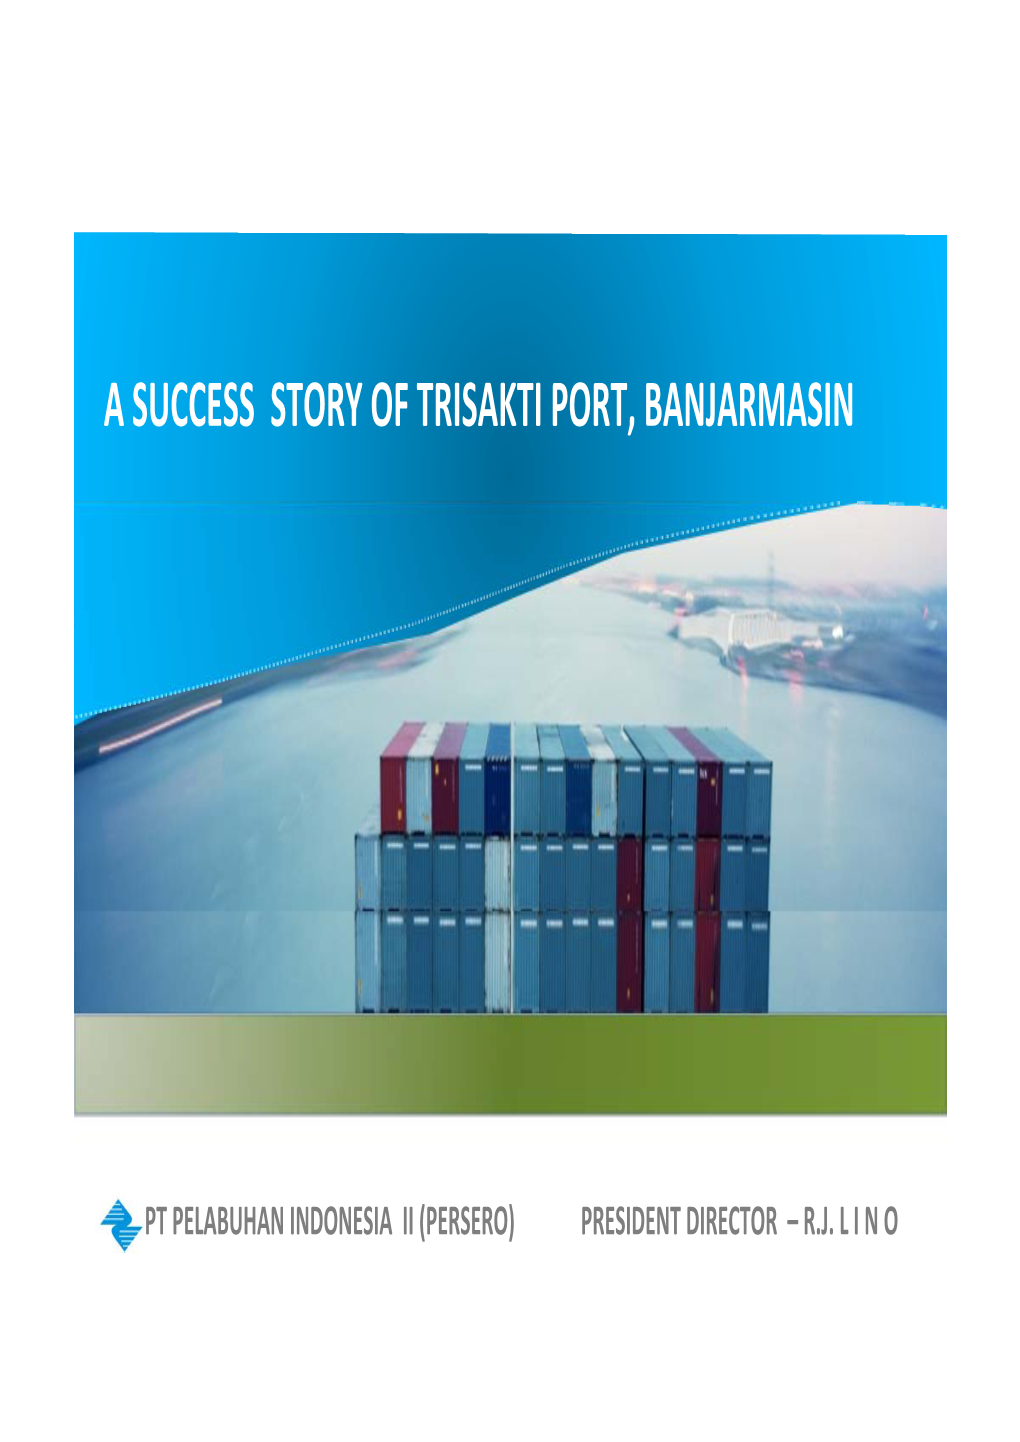 A Success Story of Trisakti Port, Banjarmasin